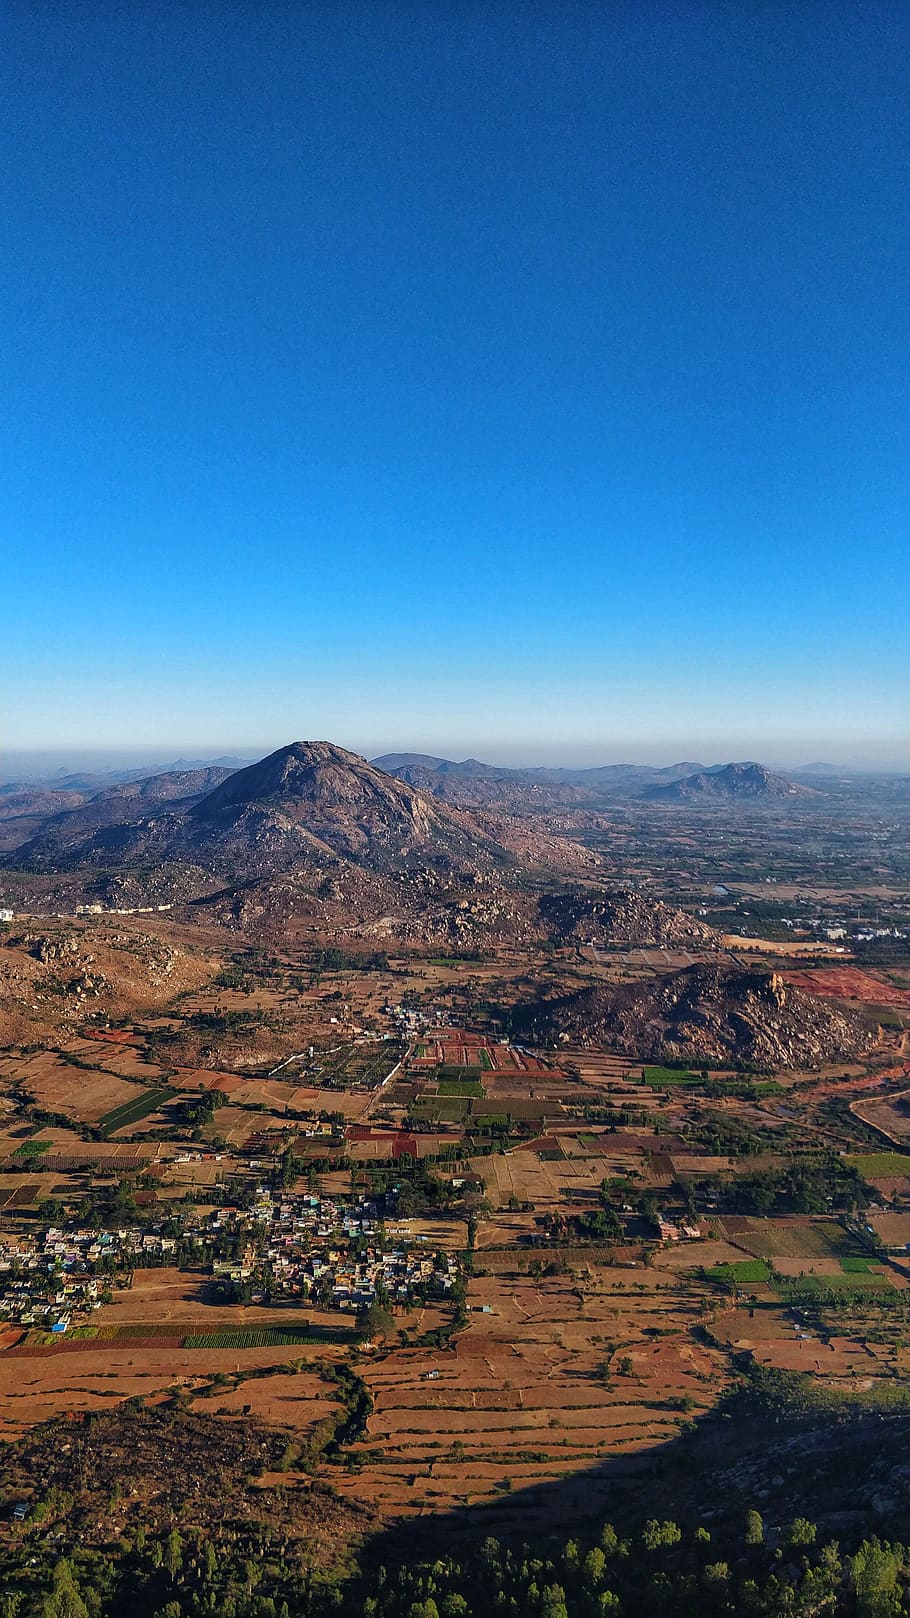 terrain, mountains, oneplus 5, nandi hills, smartphone photography